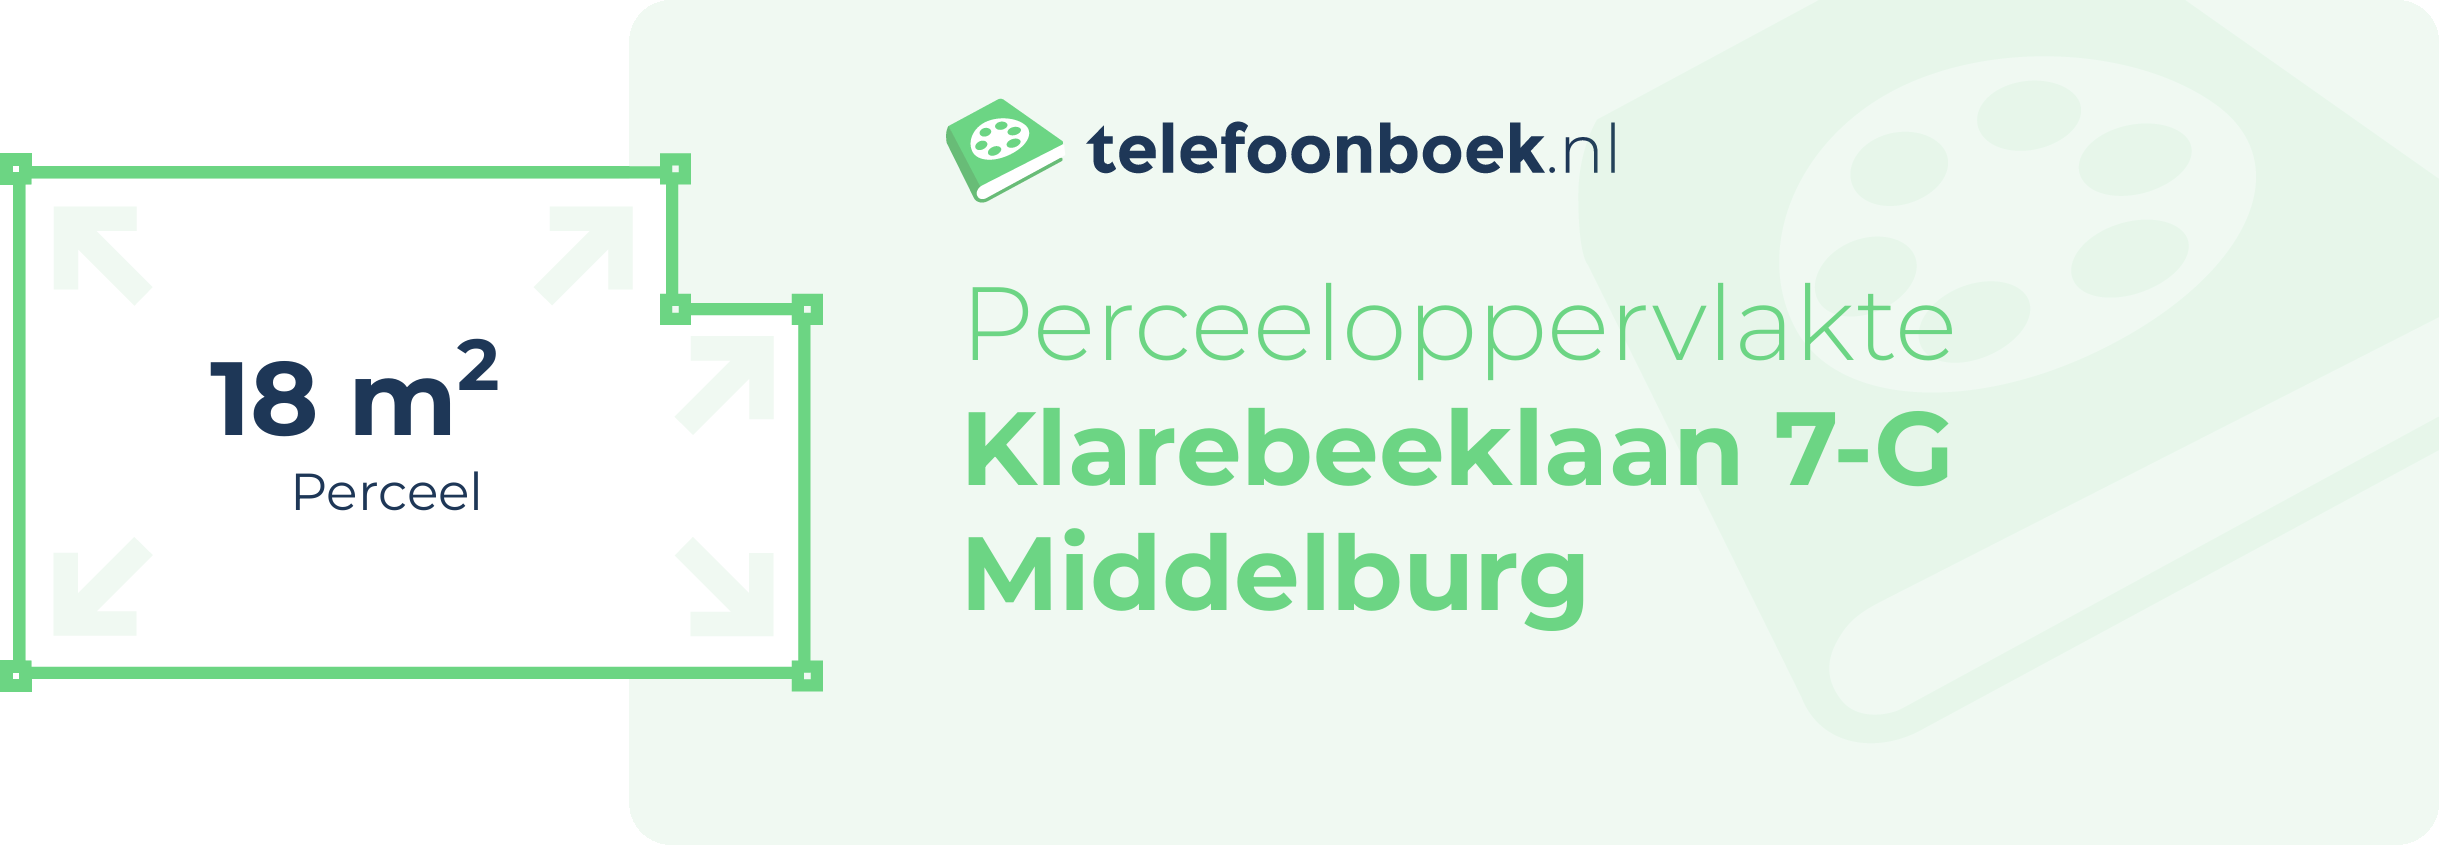 Perceeloppervlakte Klarebeeklaan 7-G Middelburg